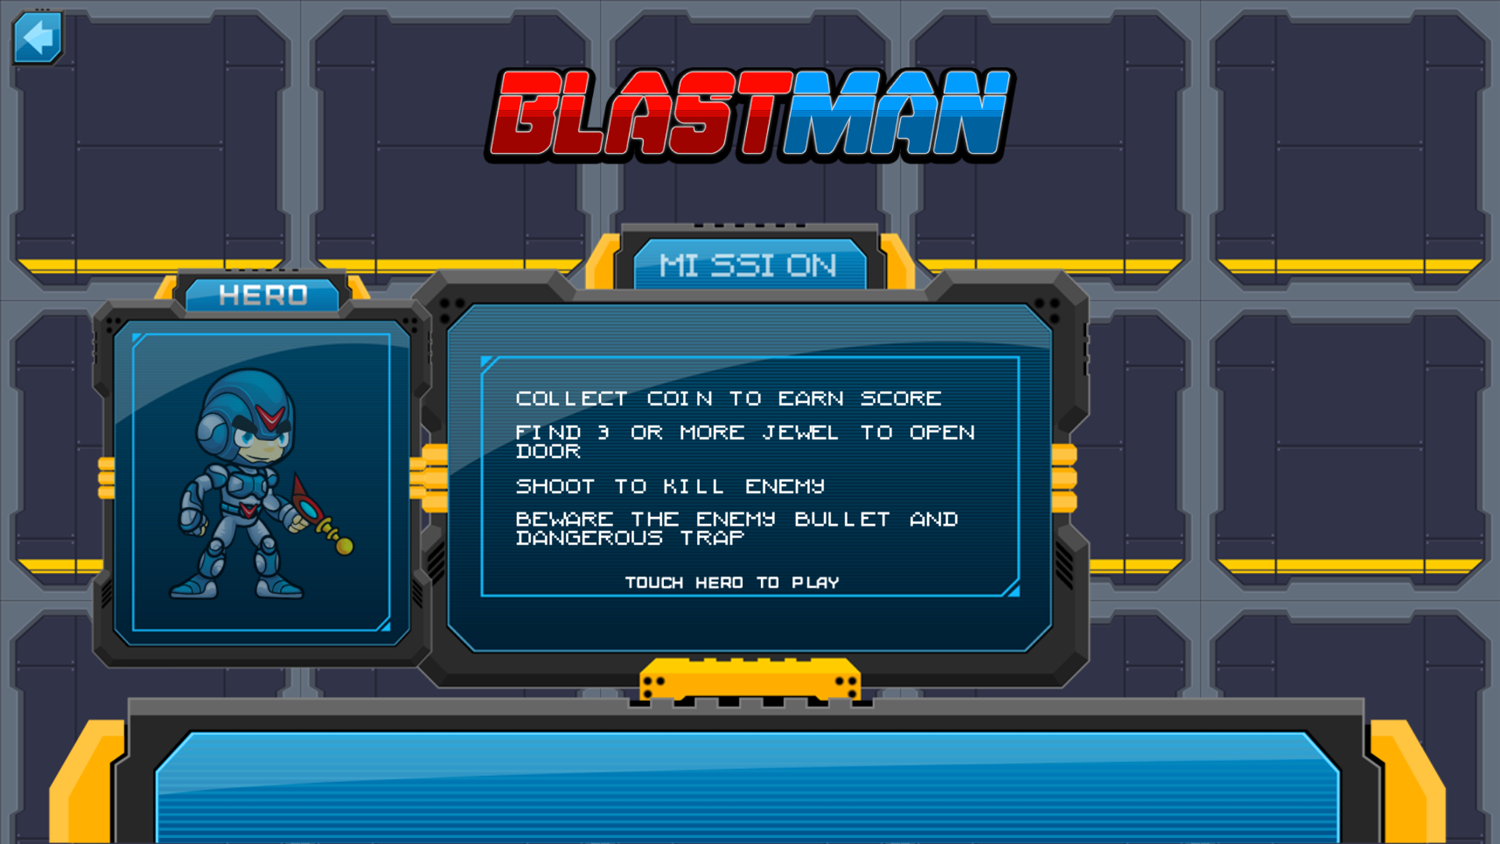 Blastman Game Mission Screenshot.